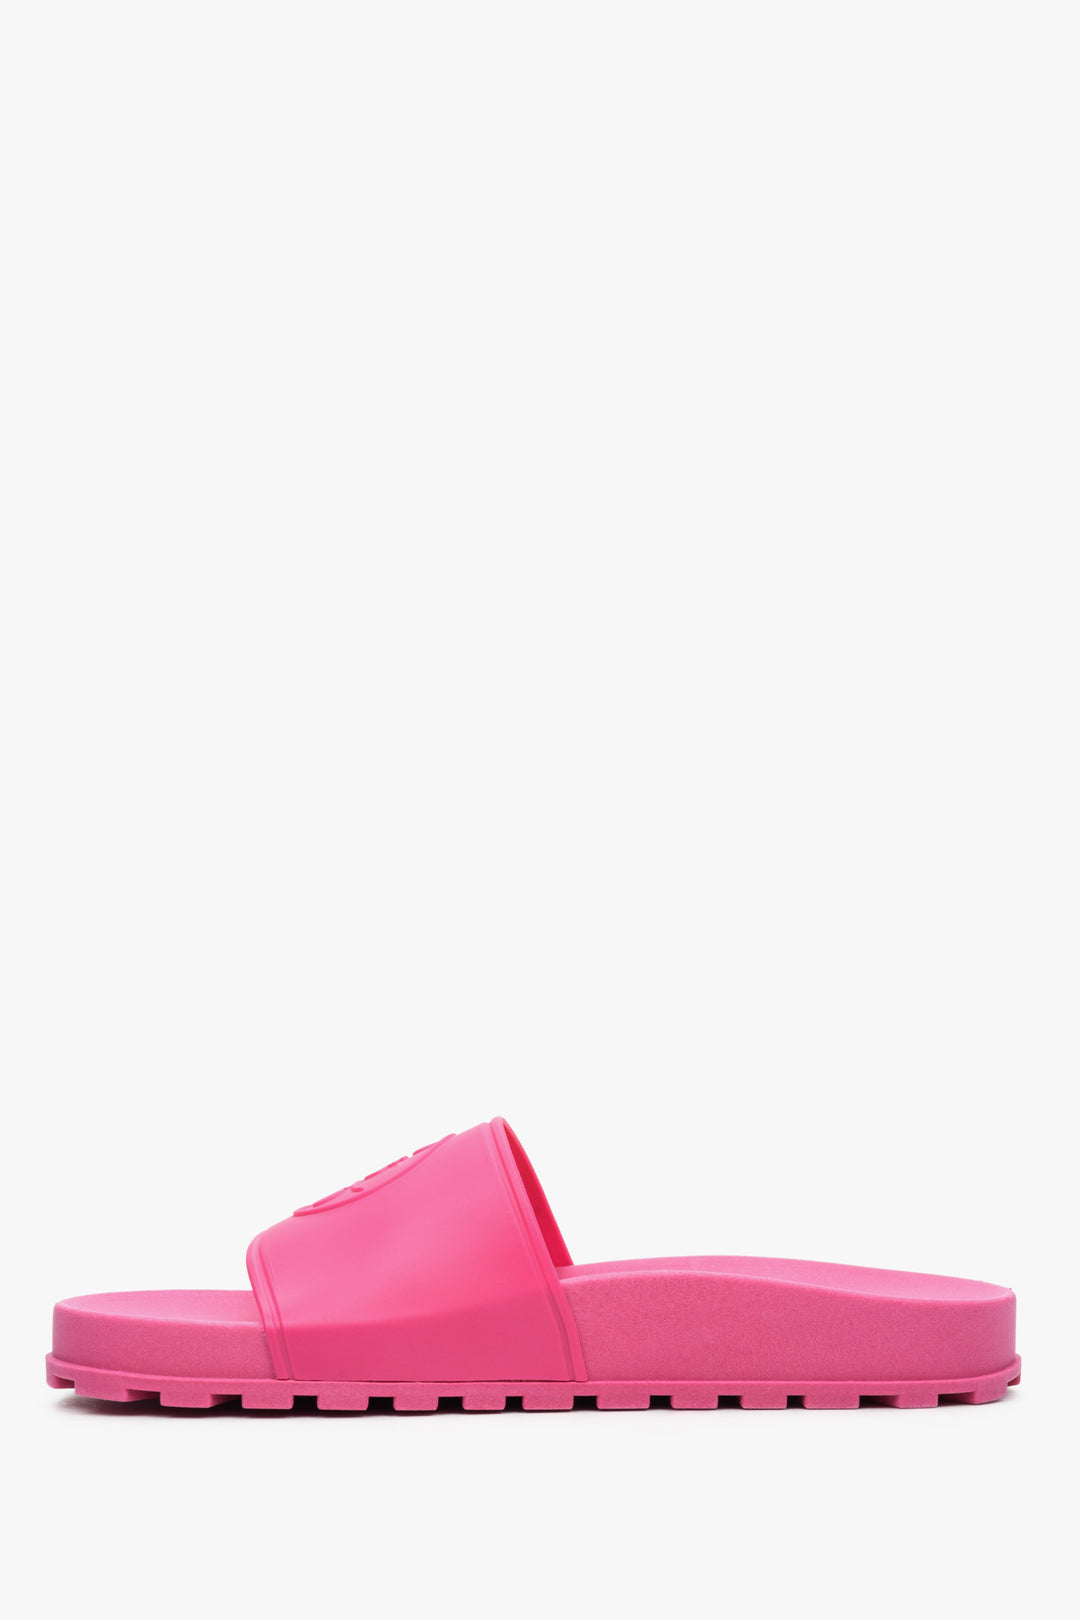 Women's pink Estro rubber flip-Flops - shoe profile.